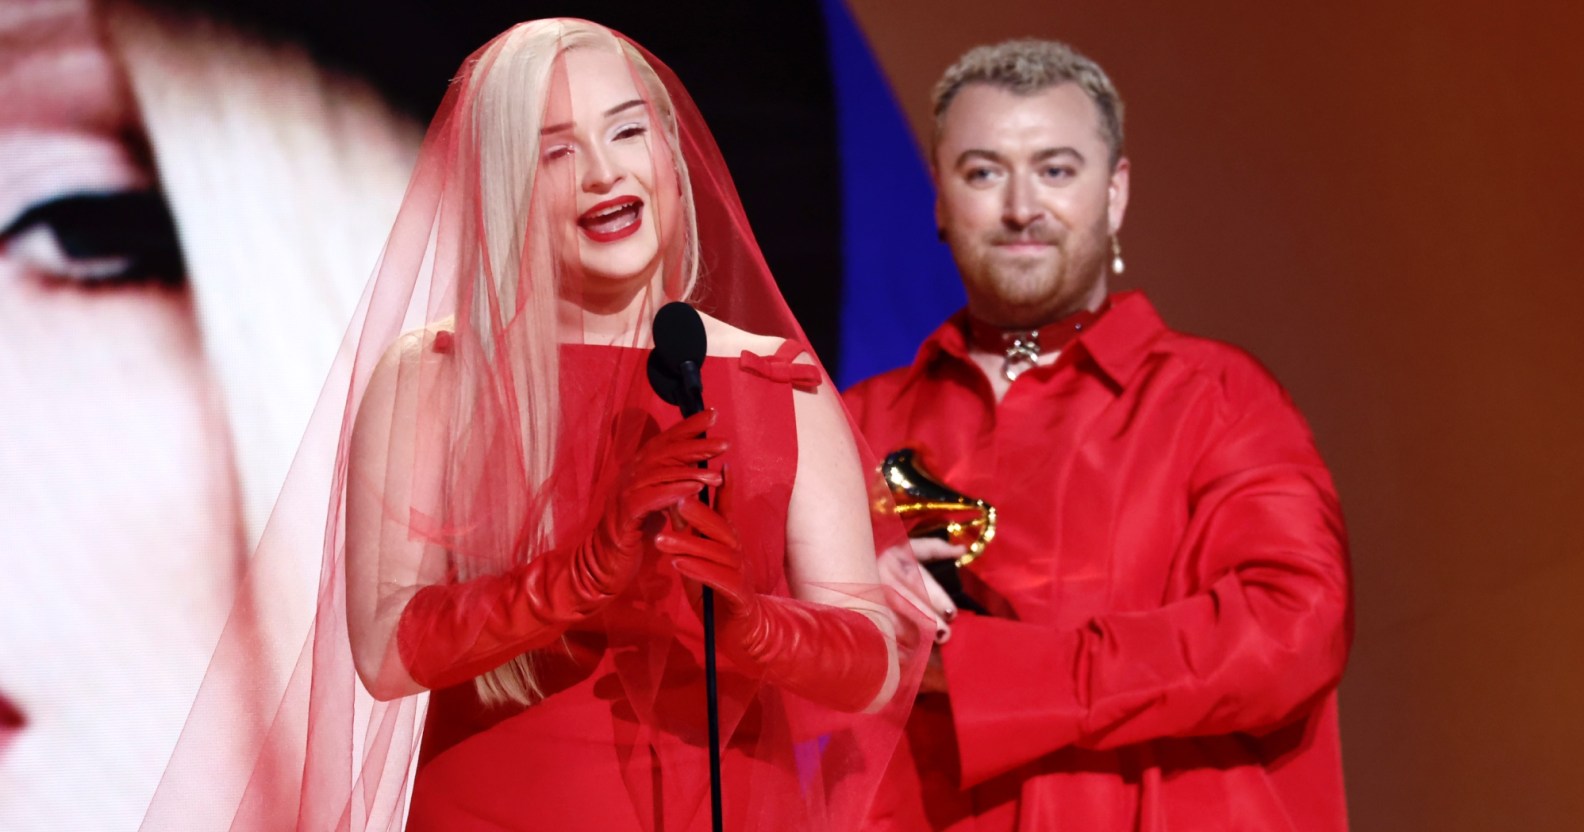 Grammys 2023: Kim Petras fans praise historic win